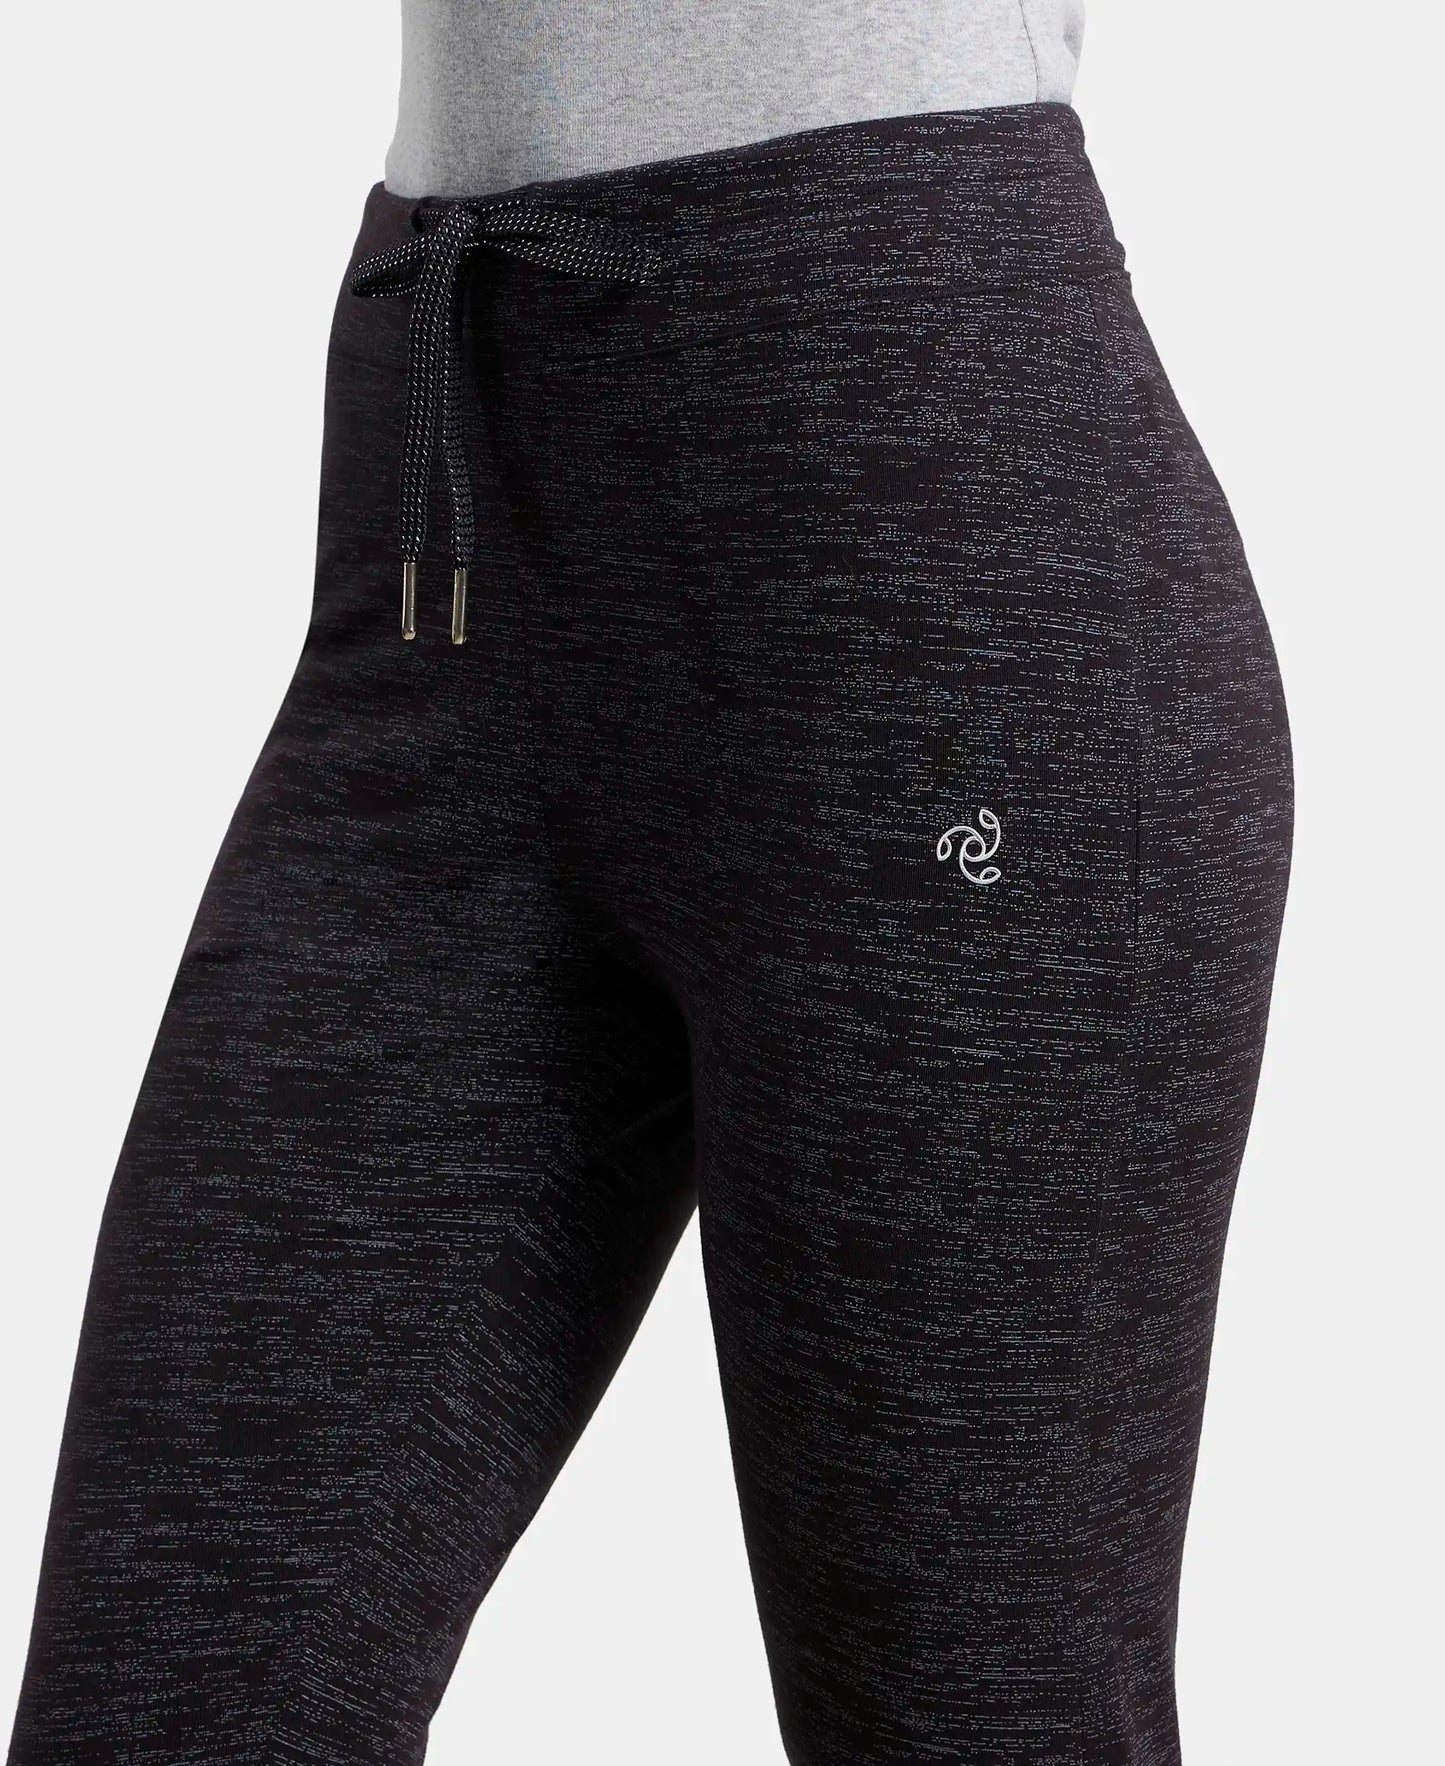 Super Combed Cotton Elastane Yoga Pants with Side Zipper Pocket - Black Marl-6